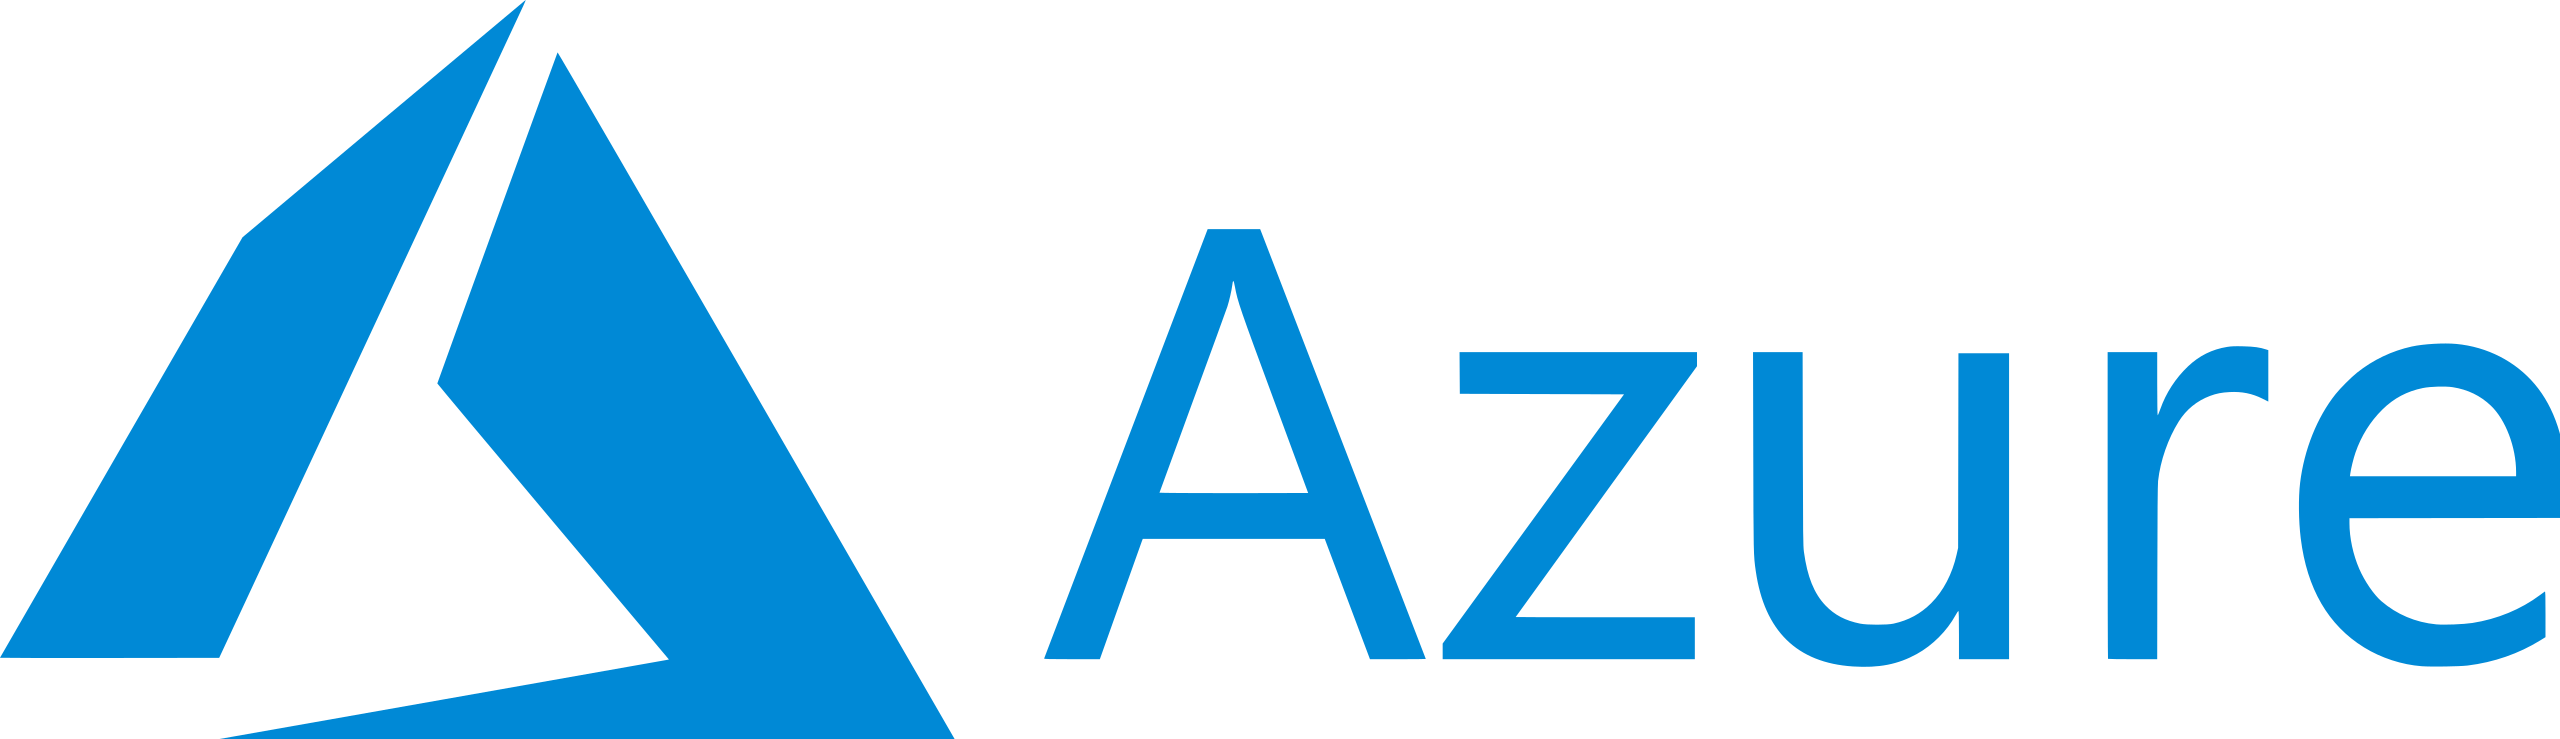 Azure logo archive integration